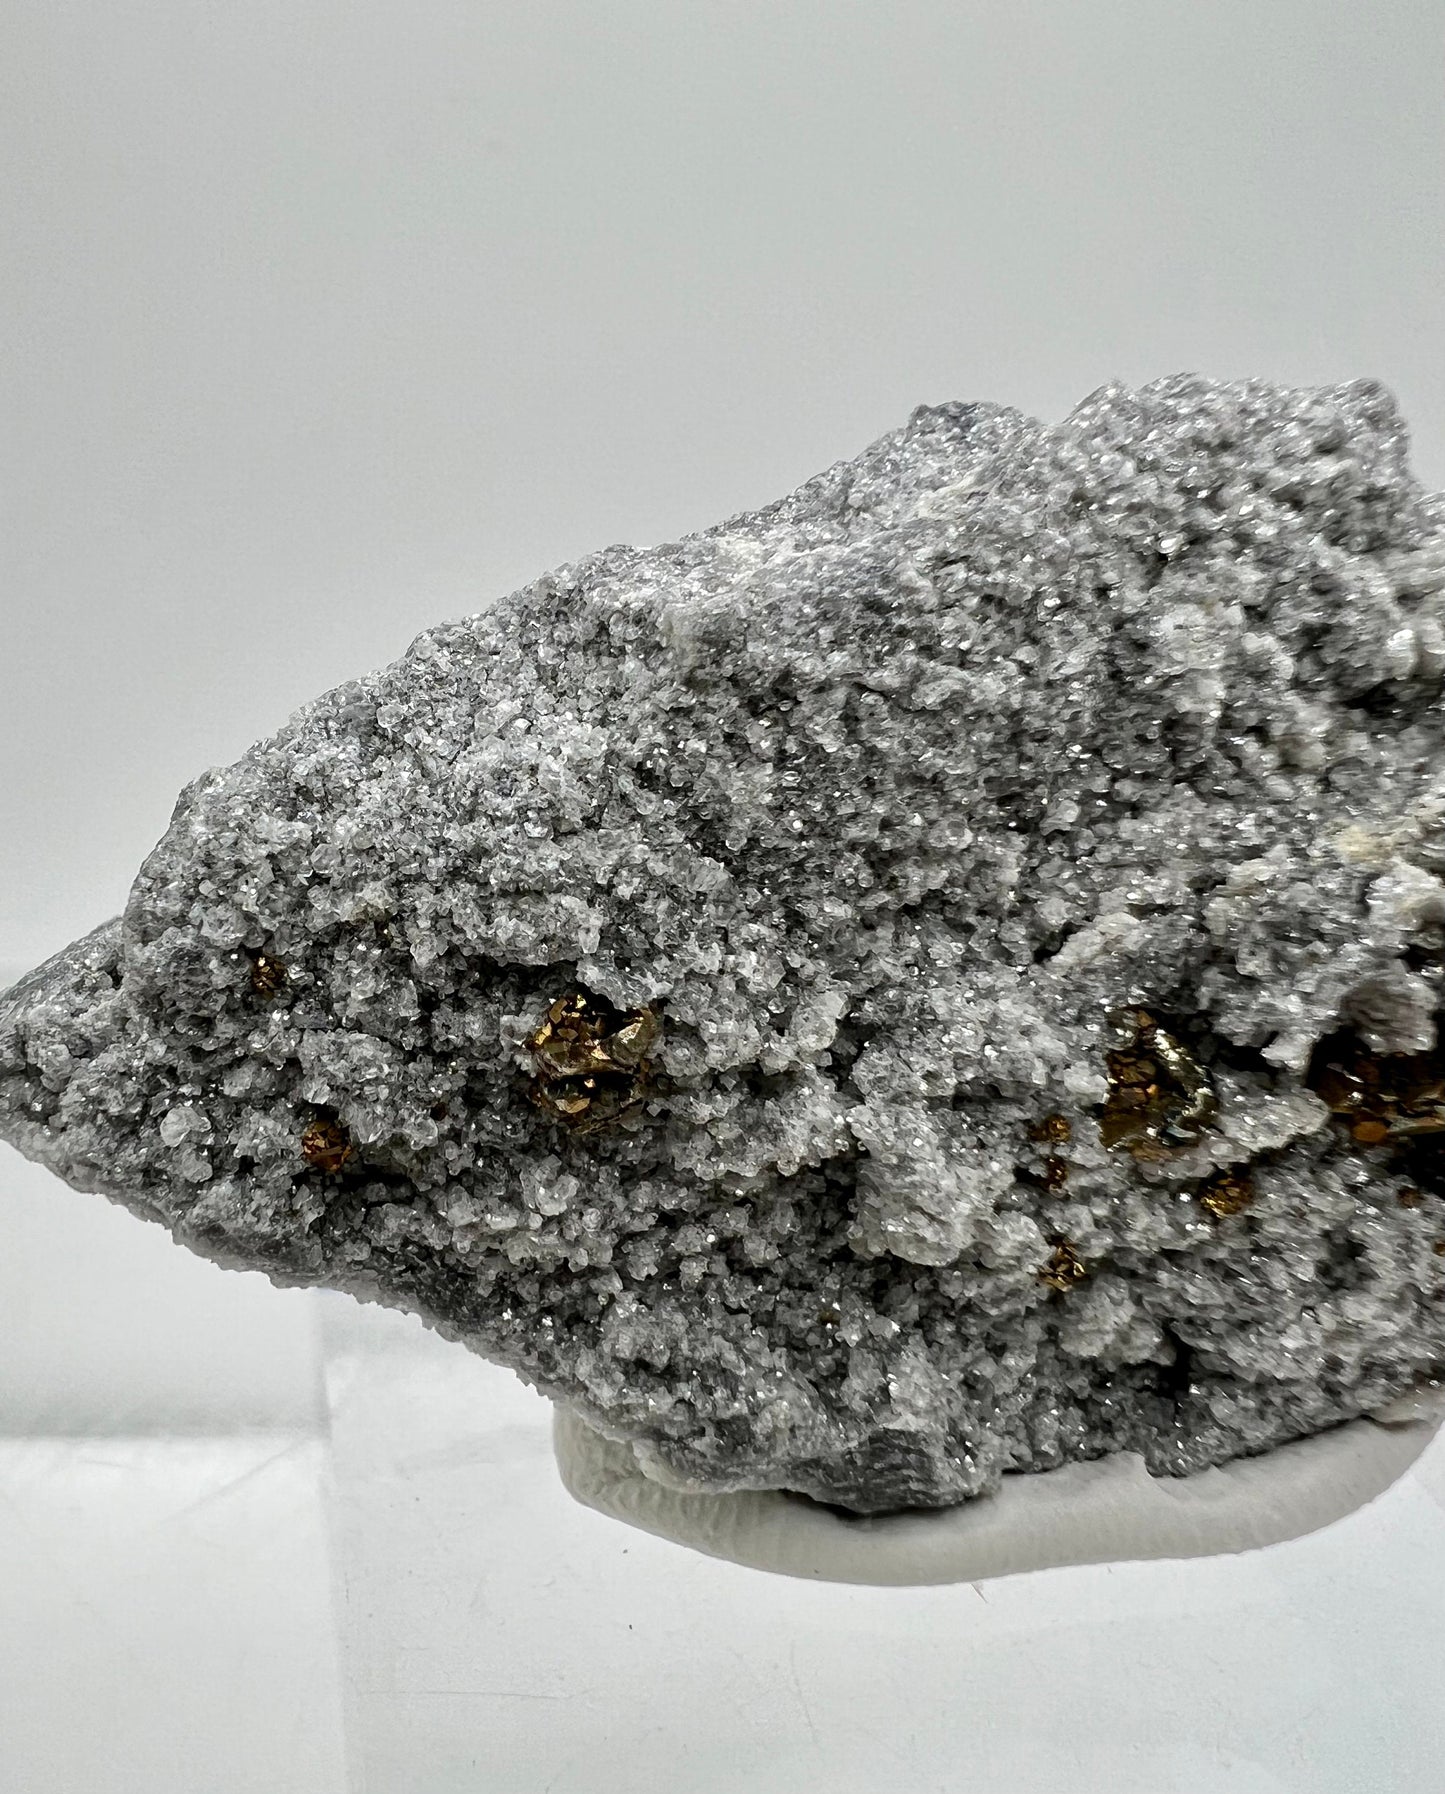 Stunning Pyrite And Sphalerite Specimen. Beautiful Pyrite On Sugar Druzy Matrix.